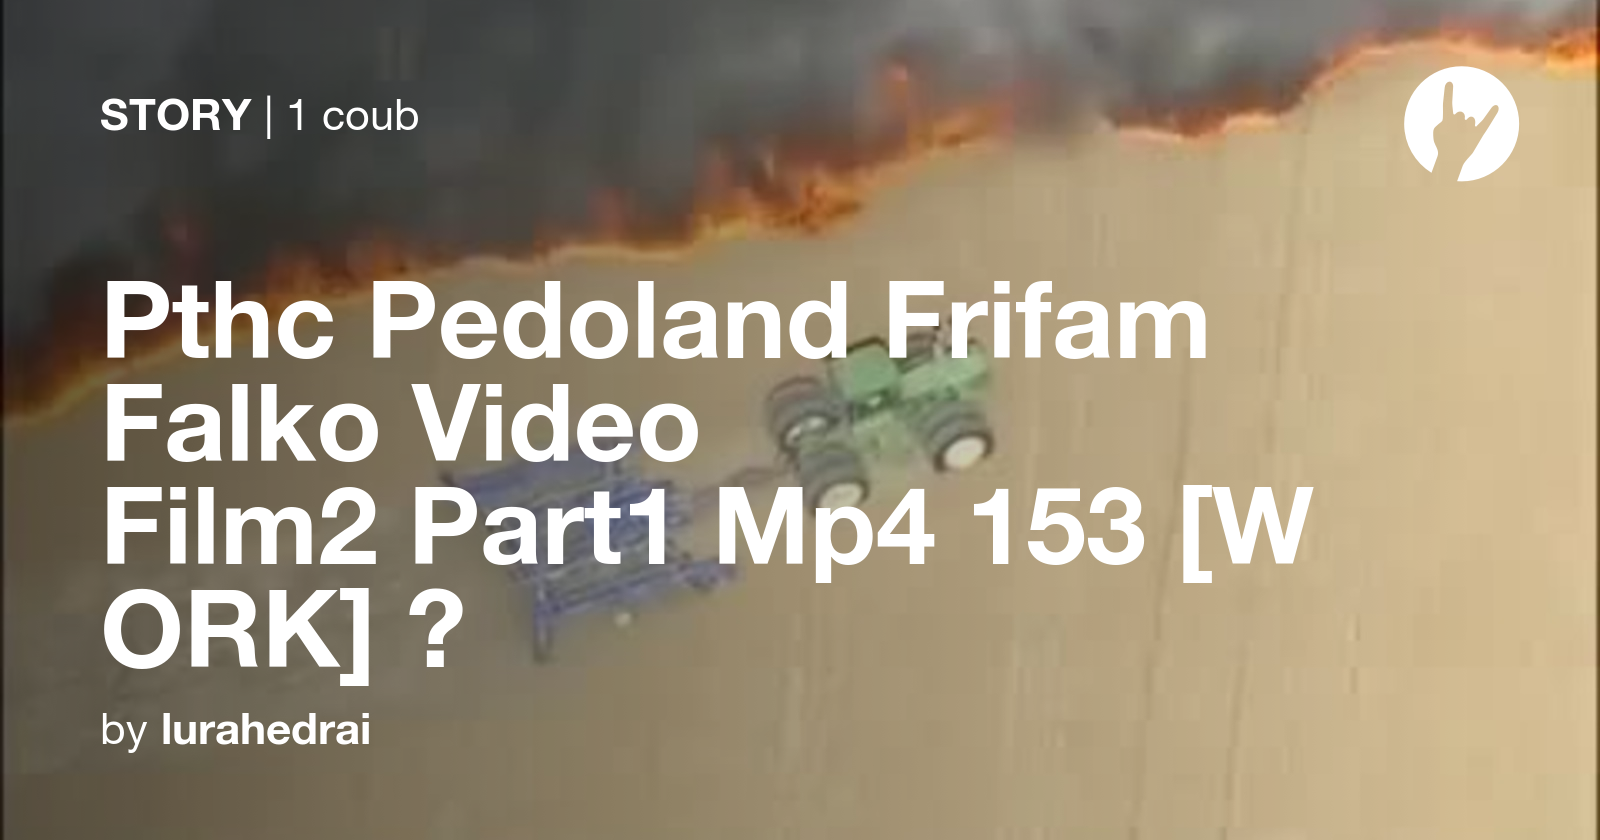 Pthc Pedoland Frifam Falko Video Film2 Part1 Mp4 153 [WORK] 🚨